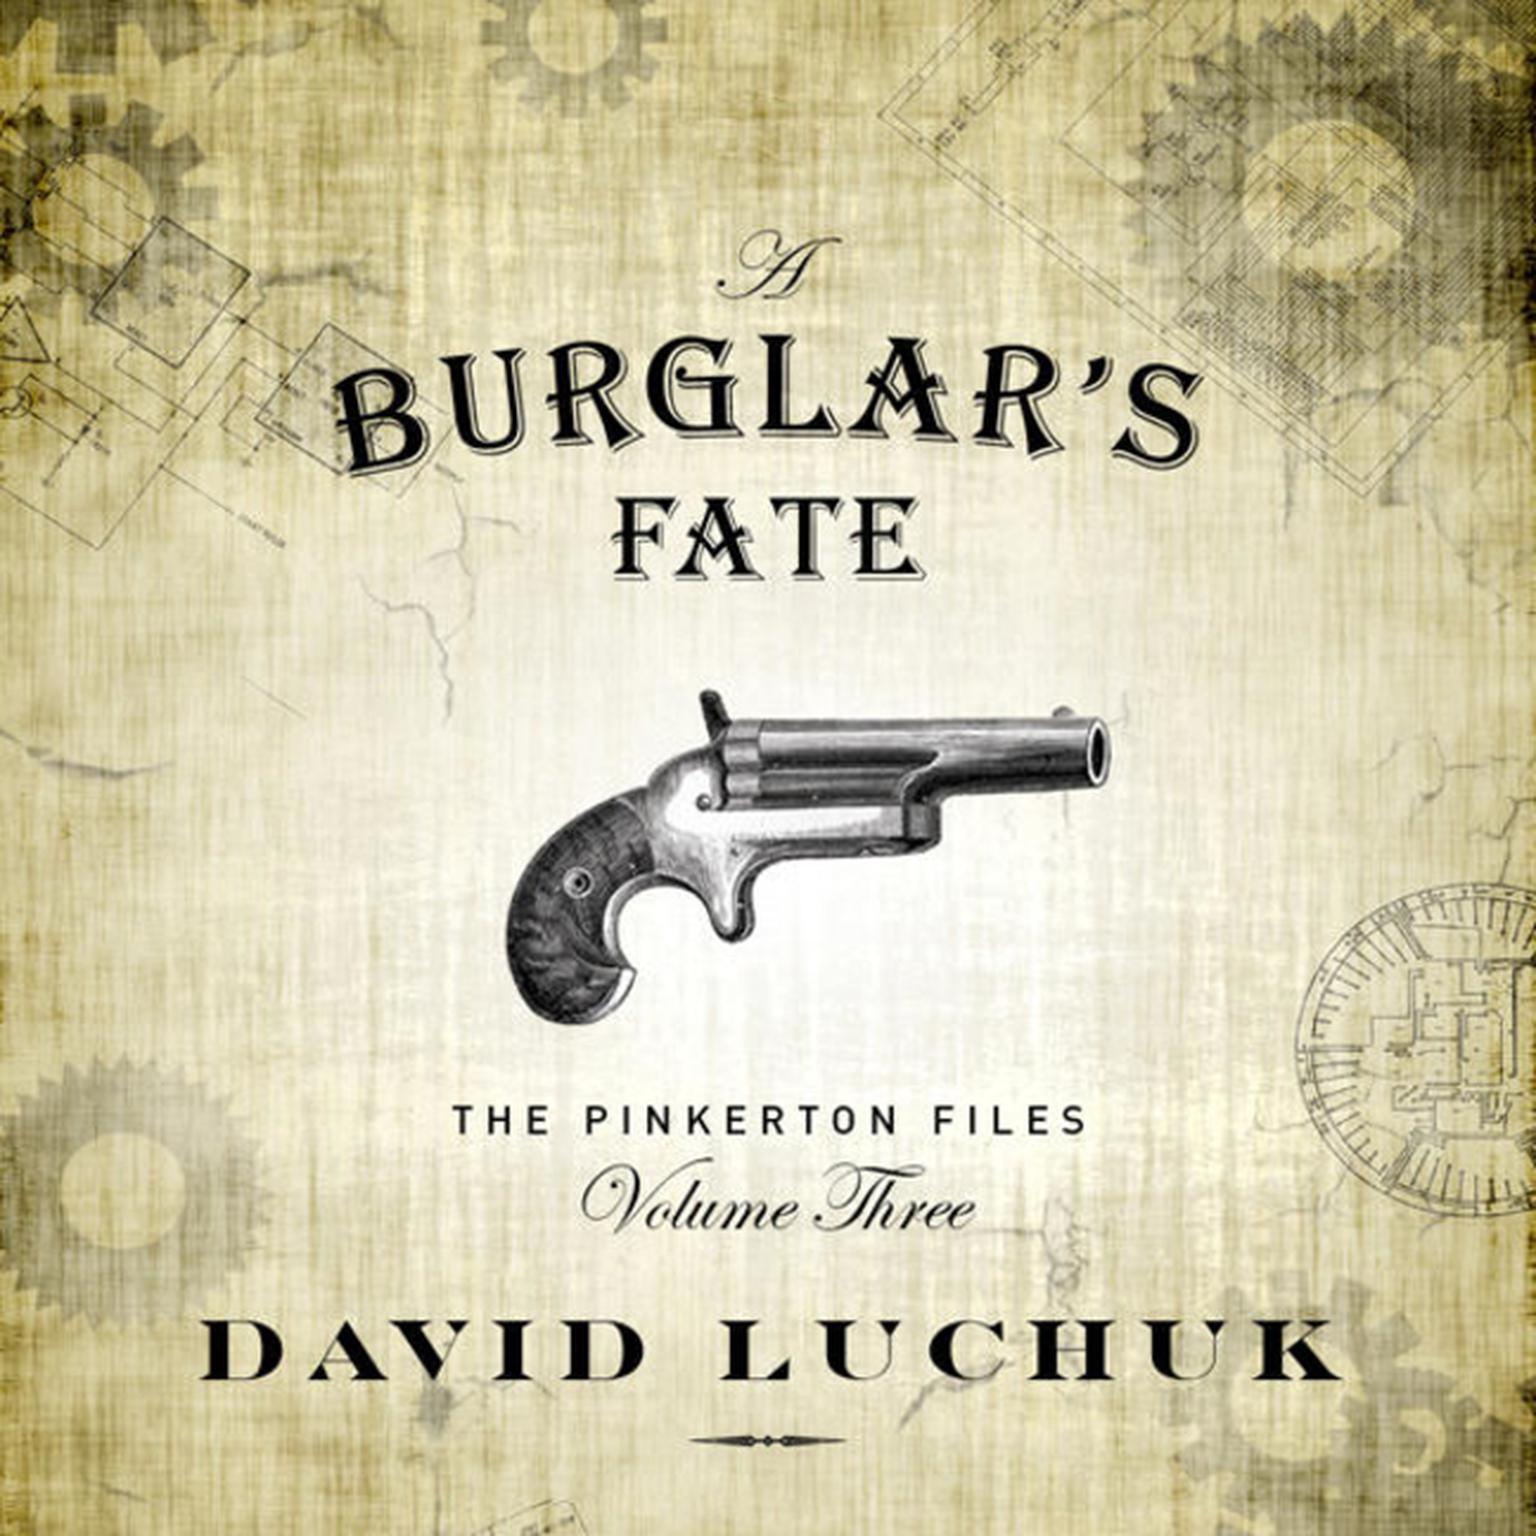 Burglars Fate, A : The Pinkerton Files, Volume 3 Audiobook, by David Luchuk